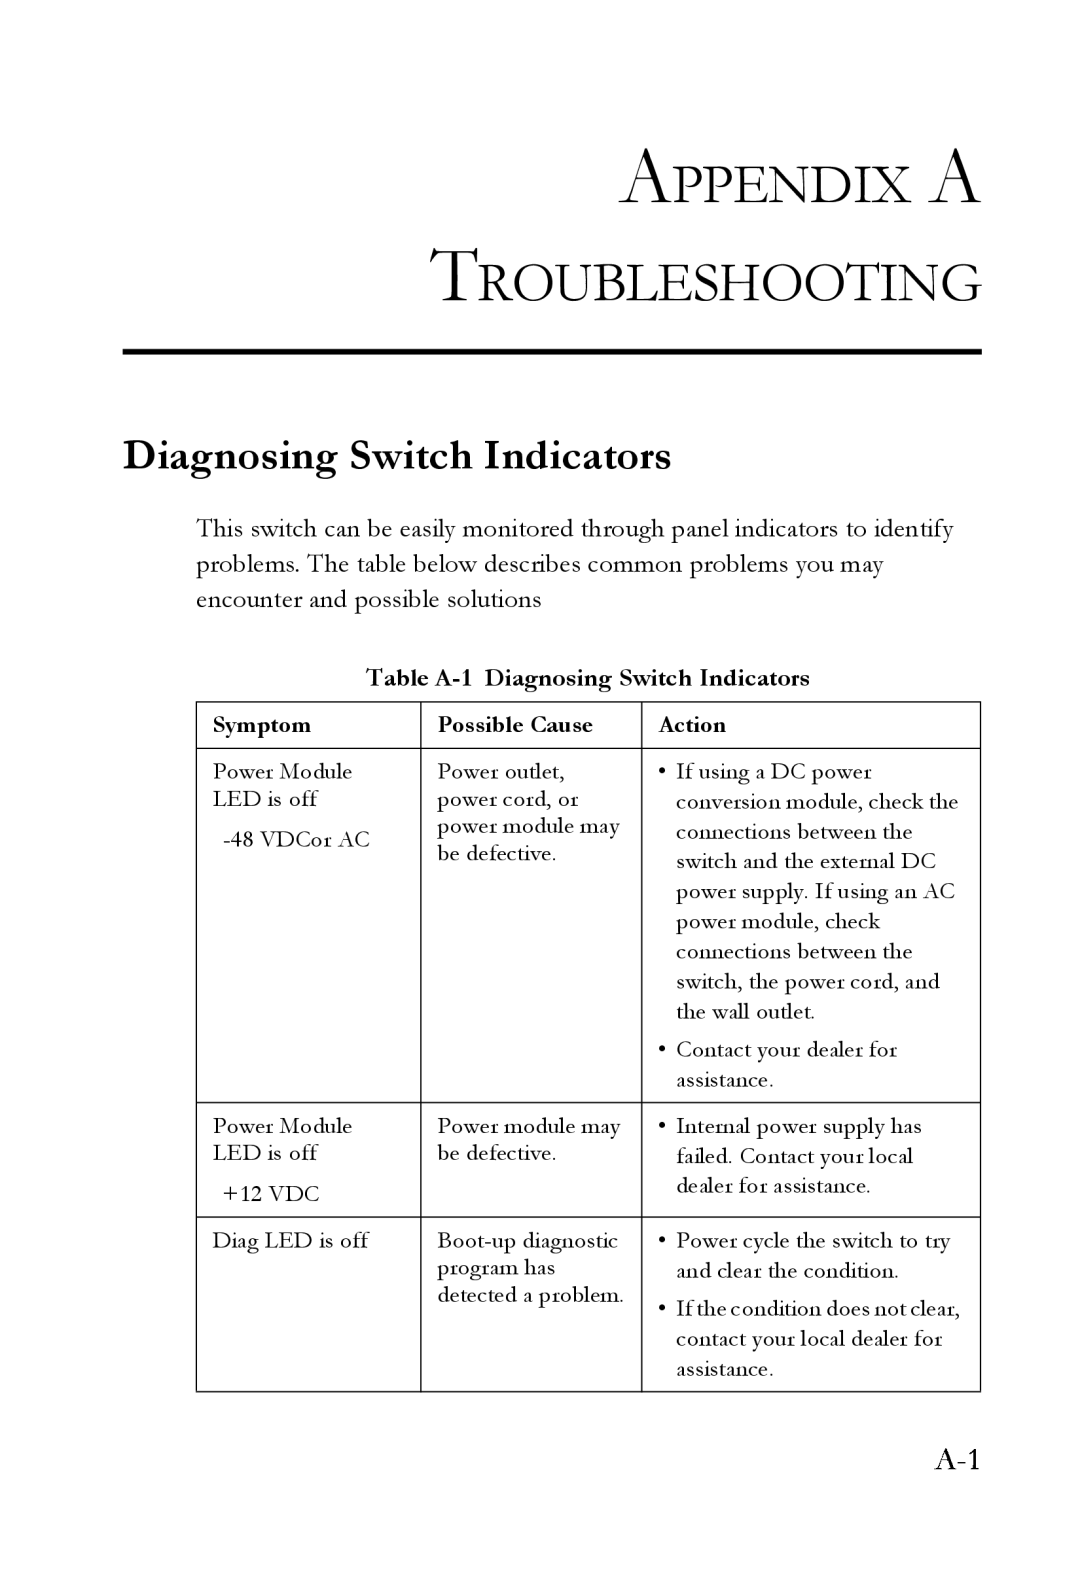 SMC Networks SMC7824M/FSW manual Appendix A Troubleshooting, Table A-1 Diagnosing Switch Indicators 